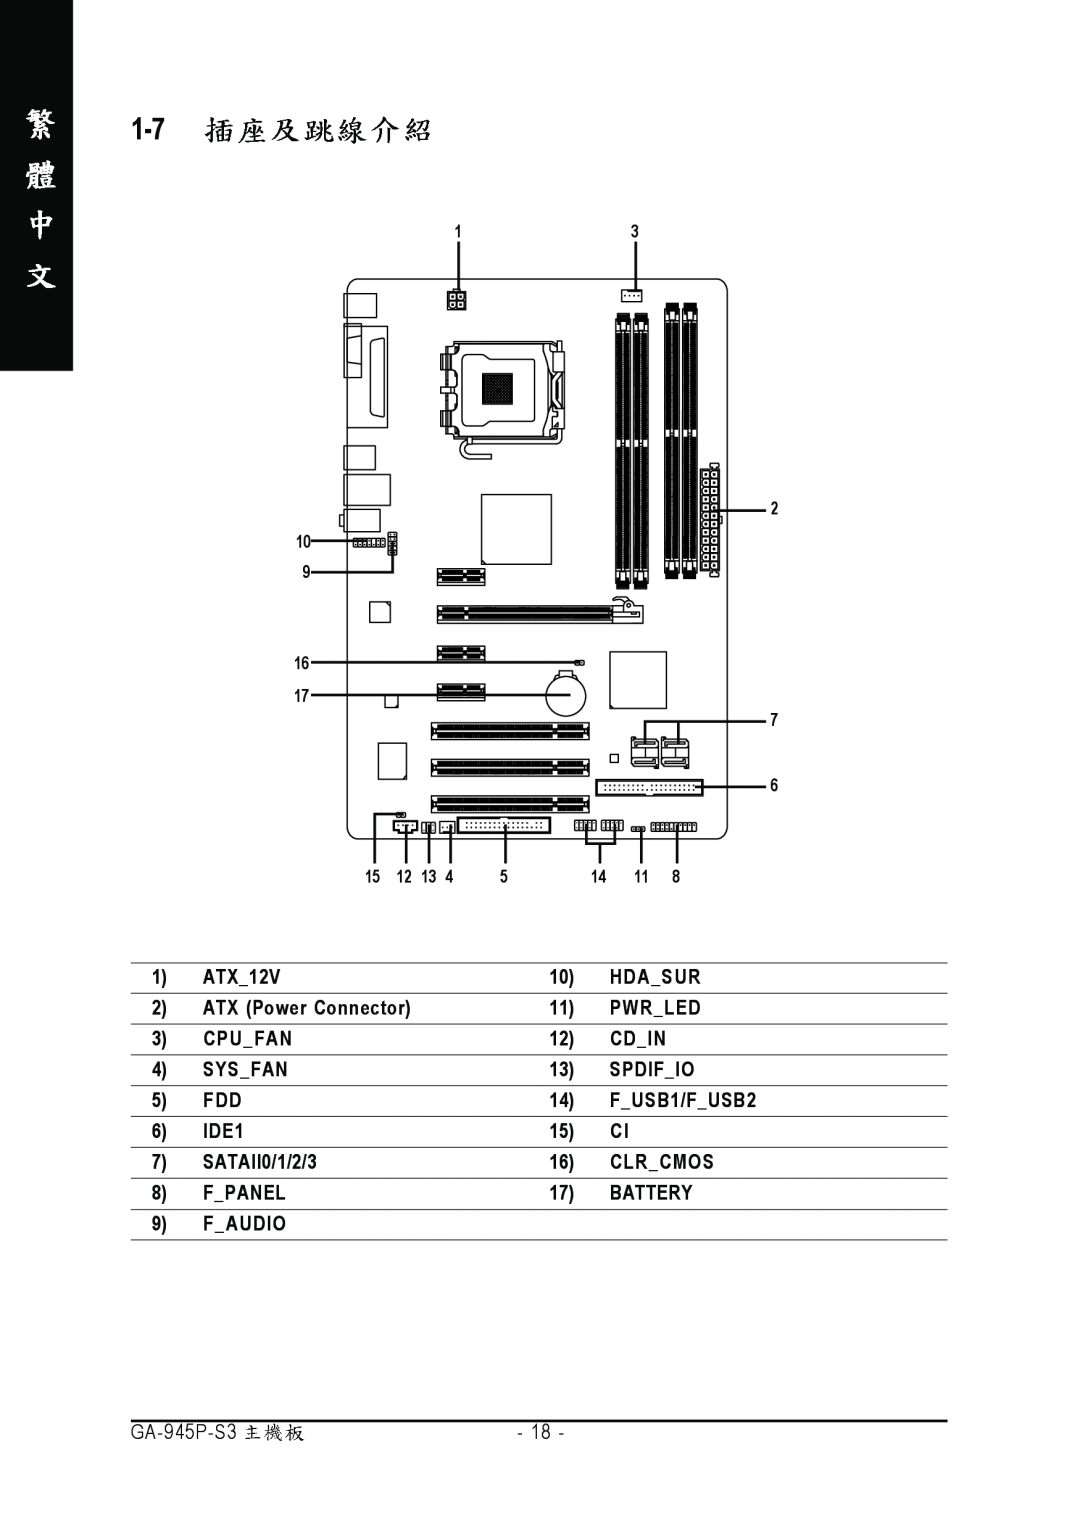 Intel GA-945P-S3 manual ATX12V 